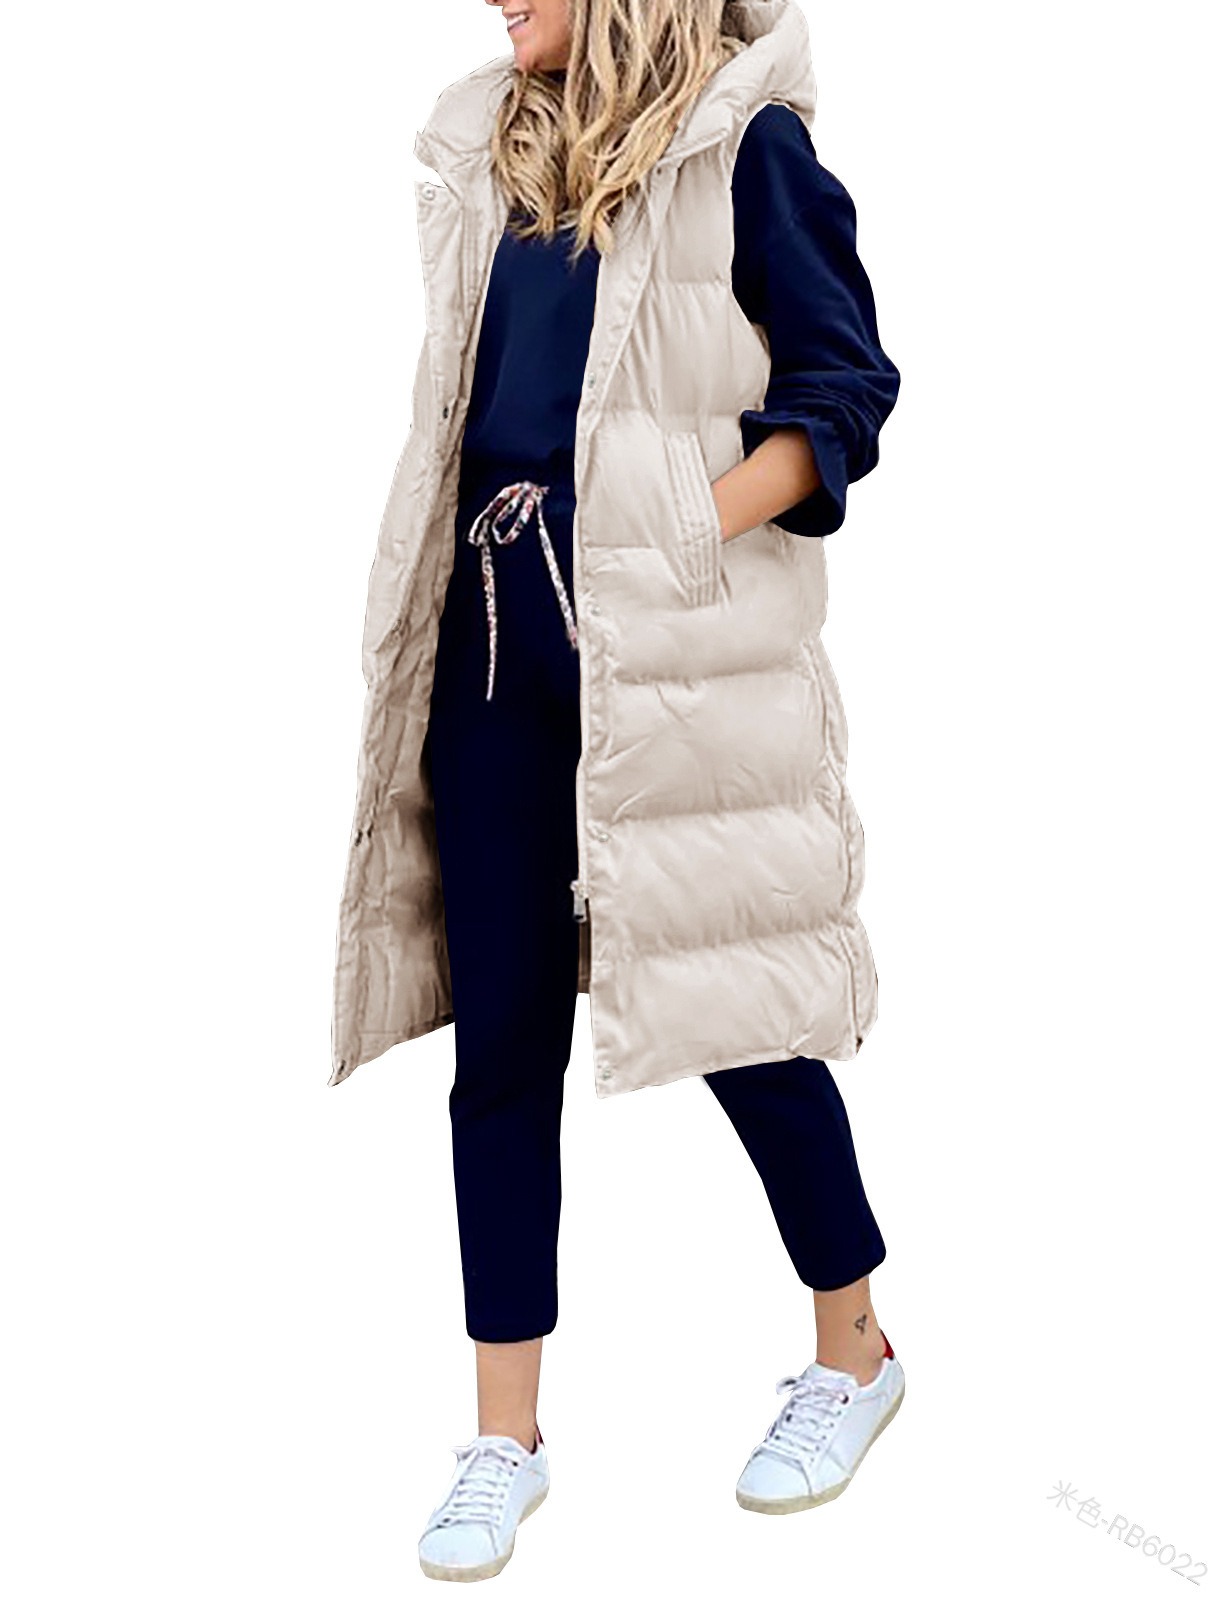 Fashionable single warm cotton jacket for women